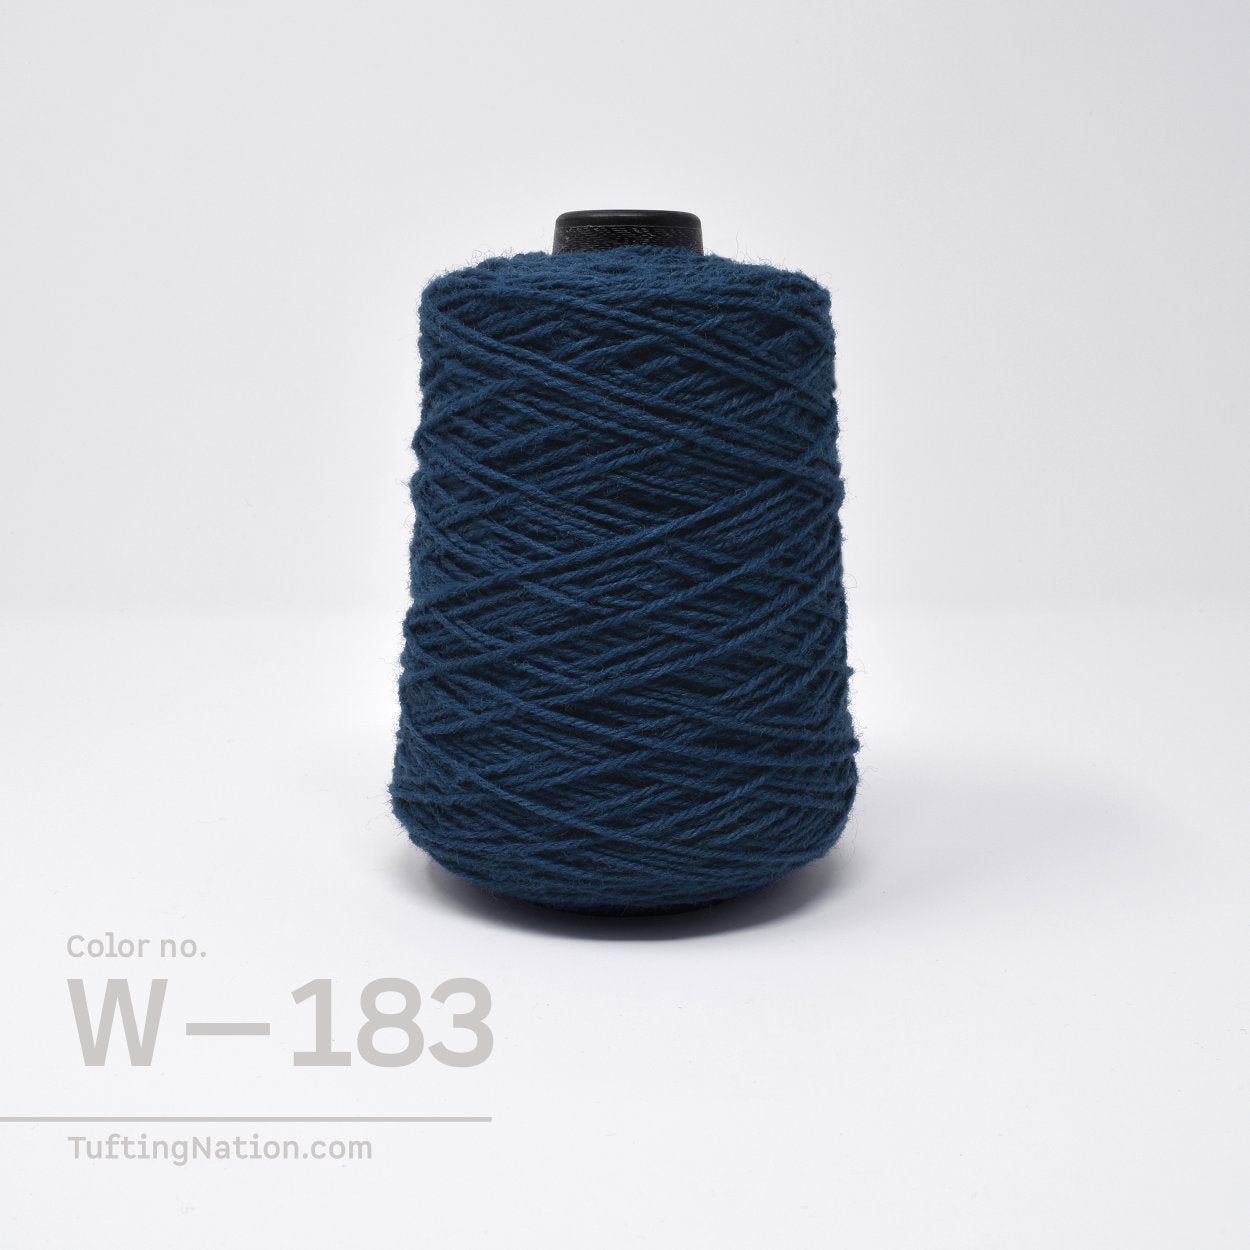 Dark Blue Tufting Gun Yarn on cones for Rug Making | TuftingNation